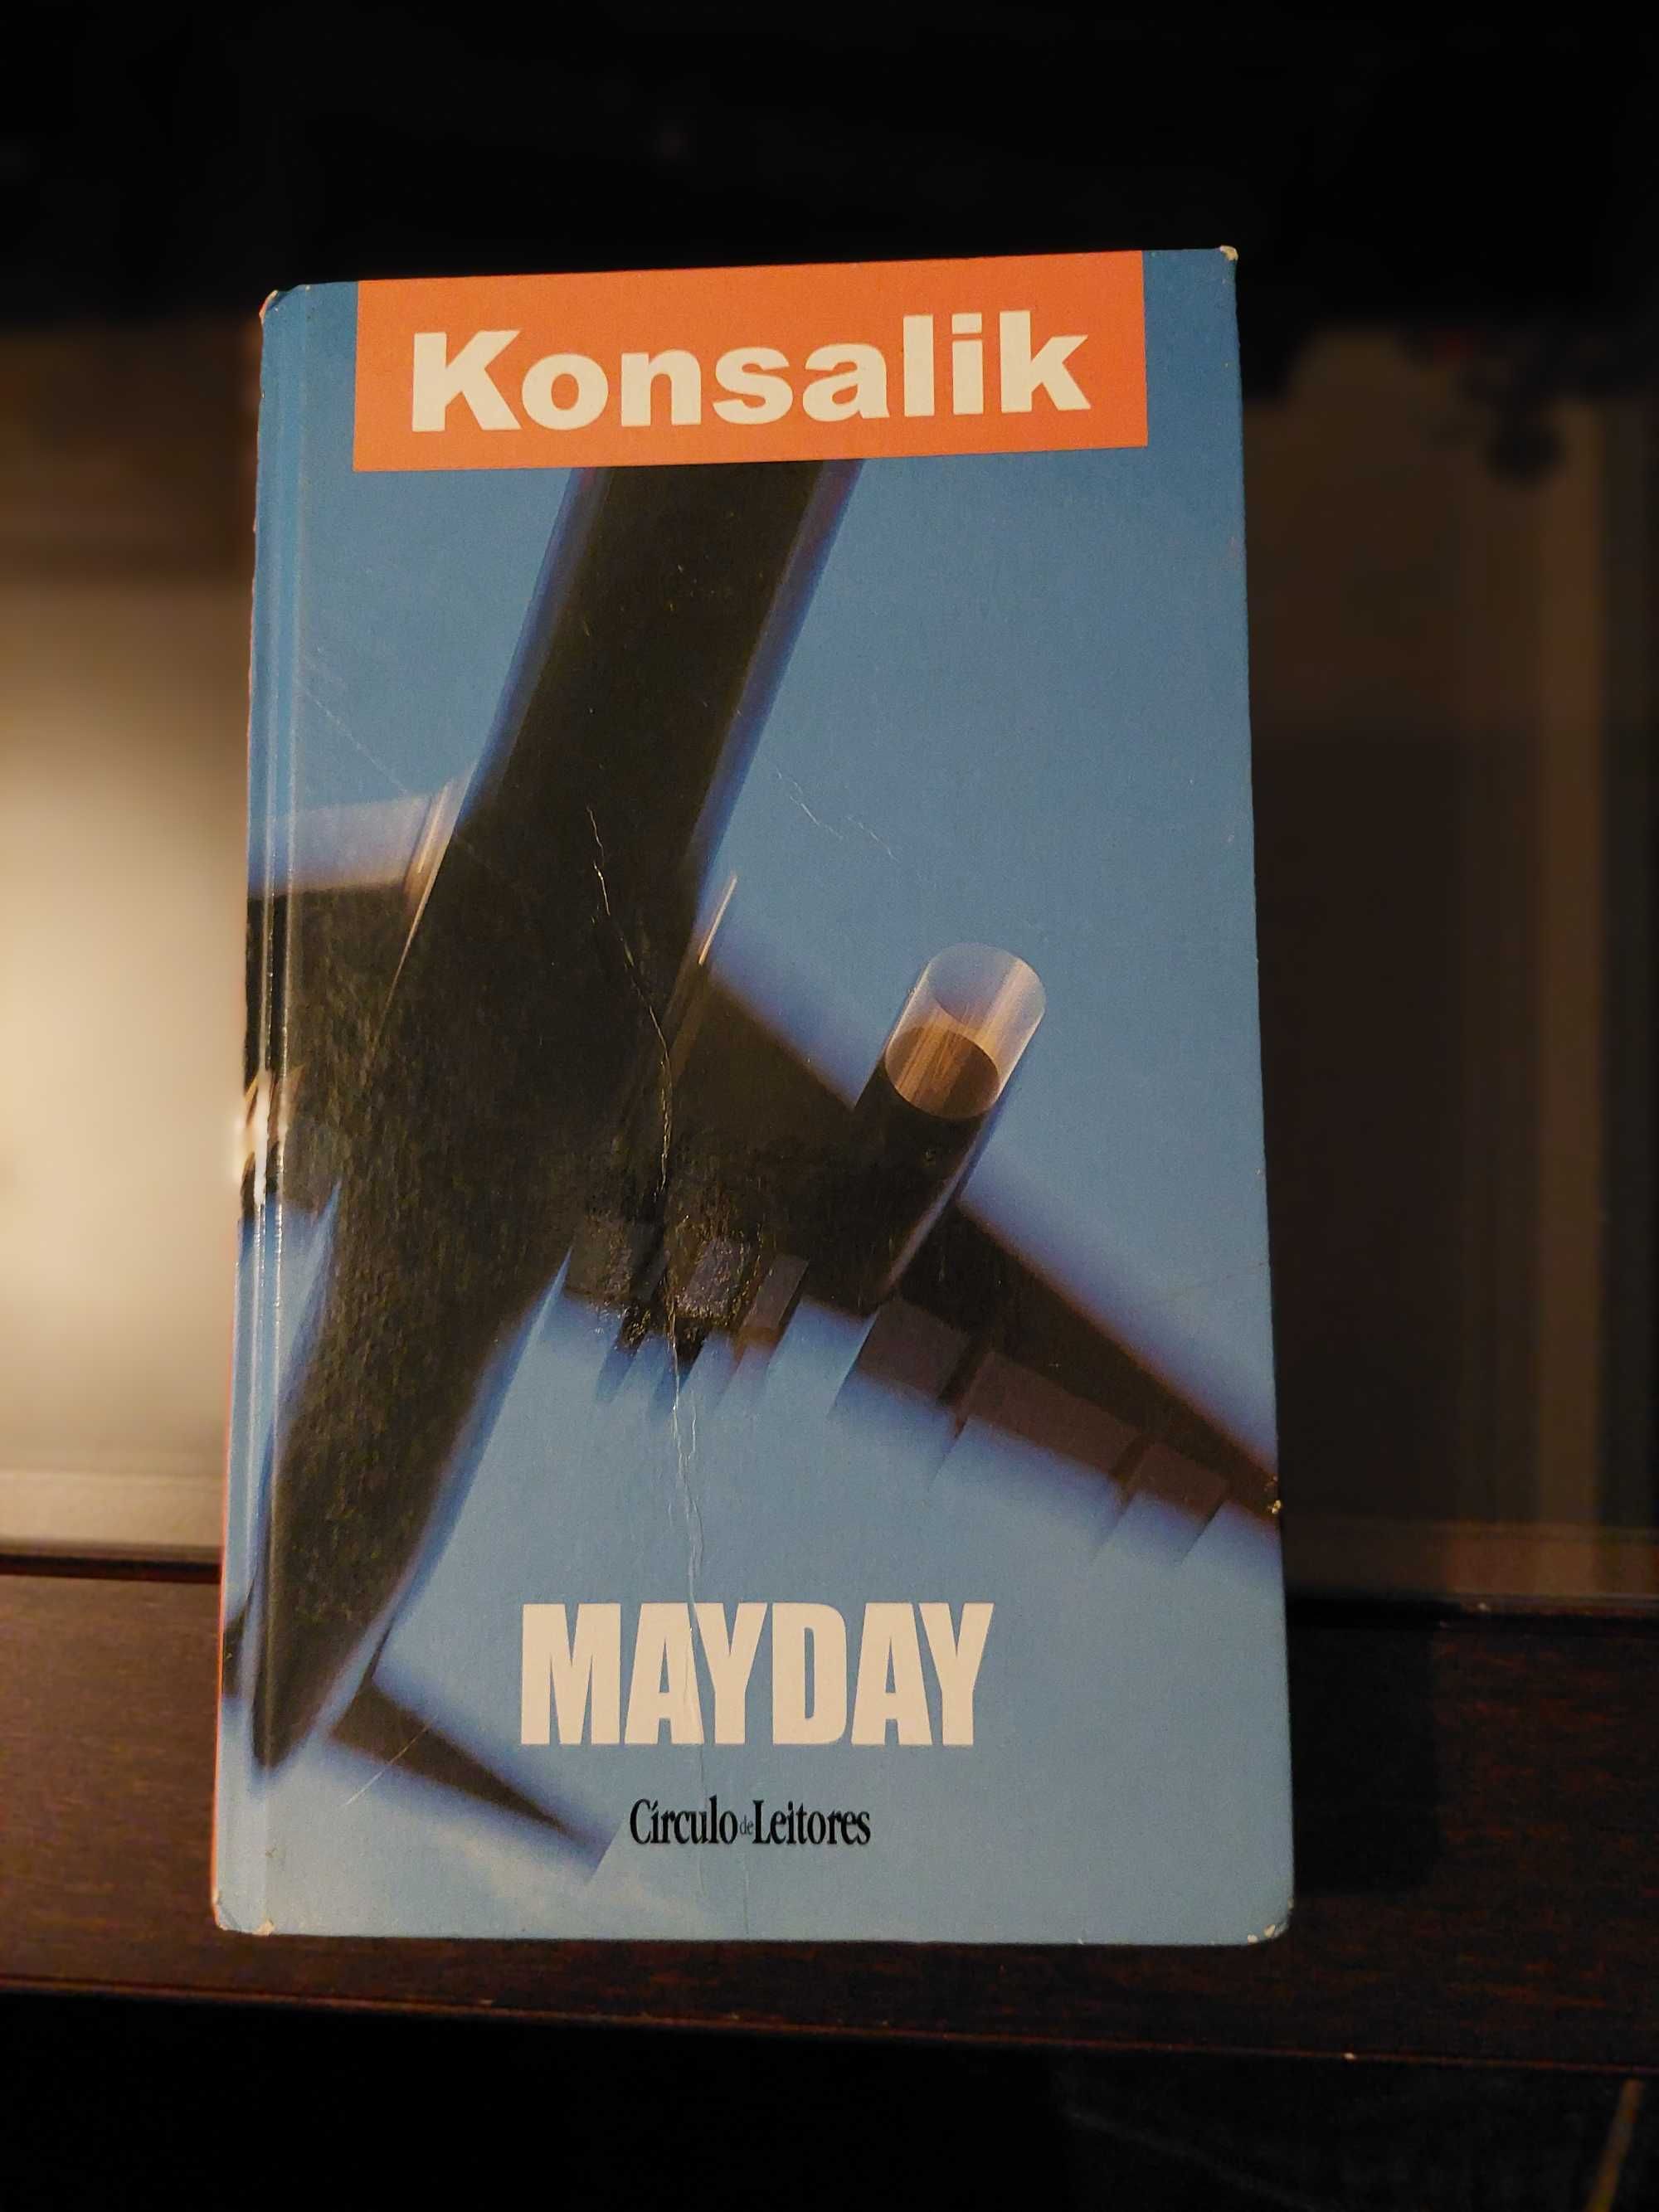 Konsalik - Mayday